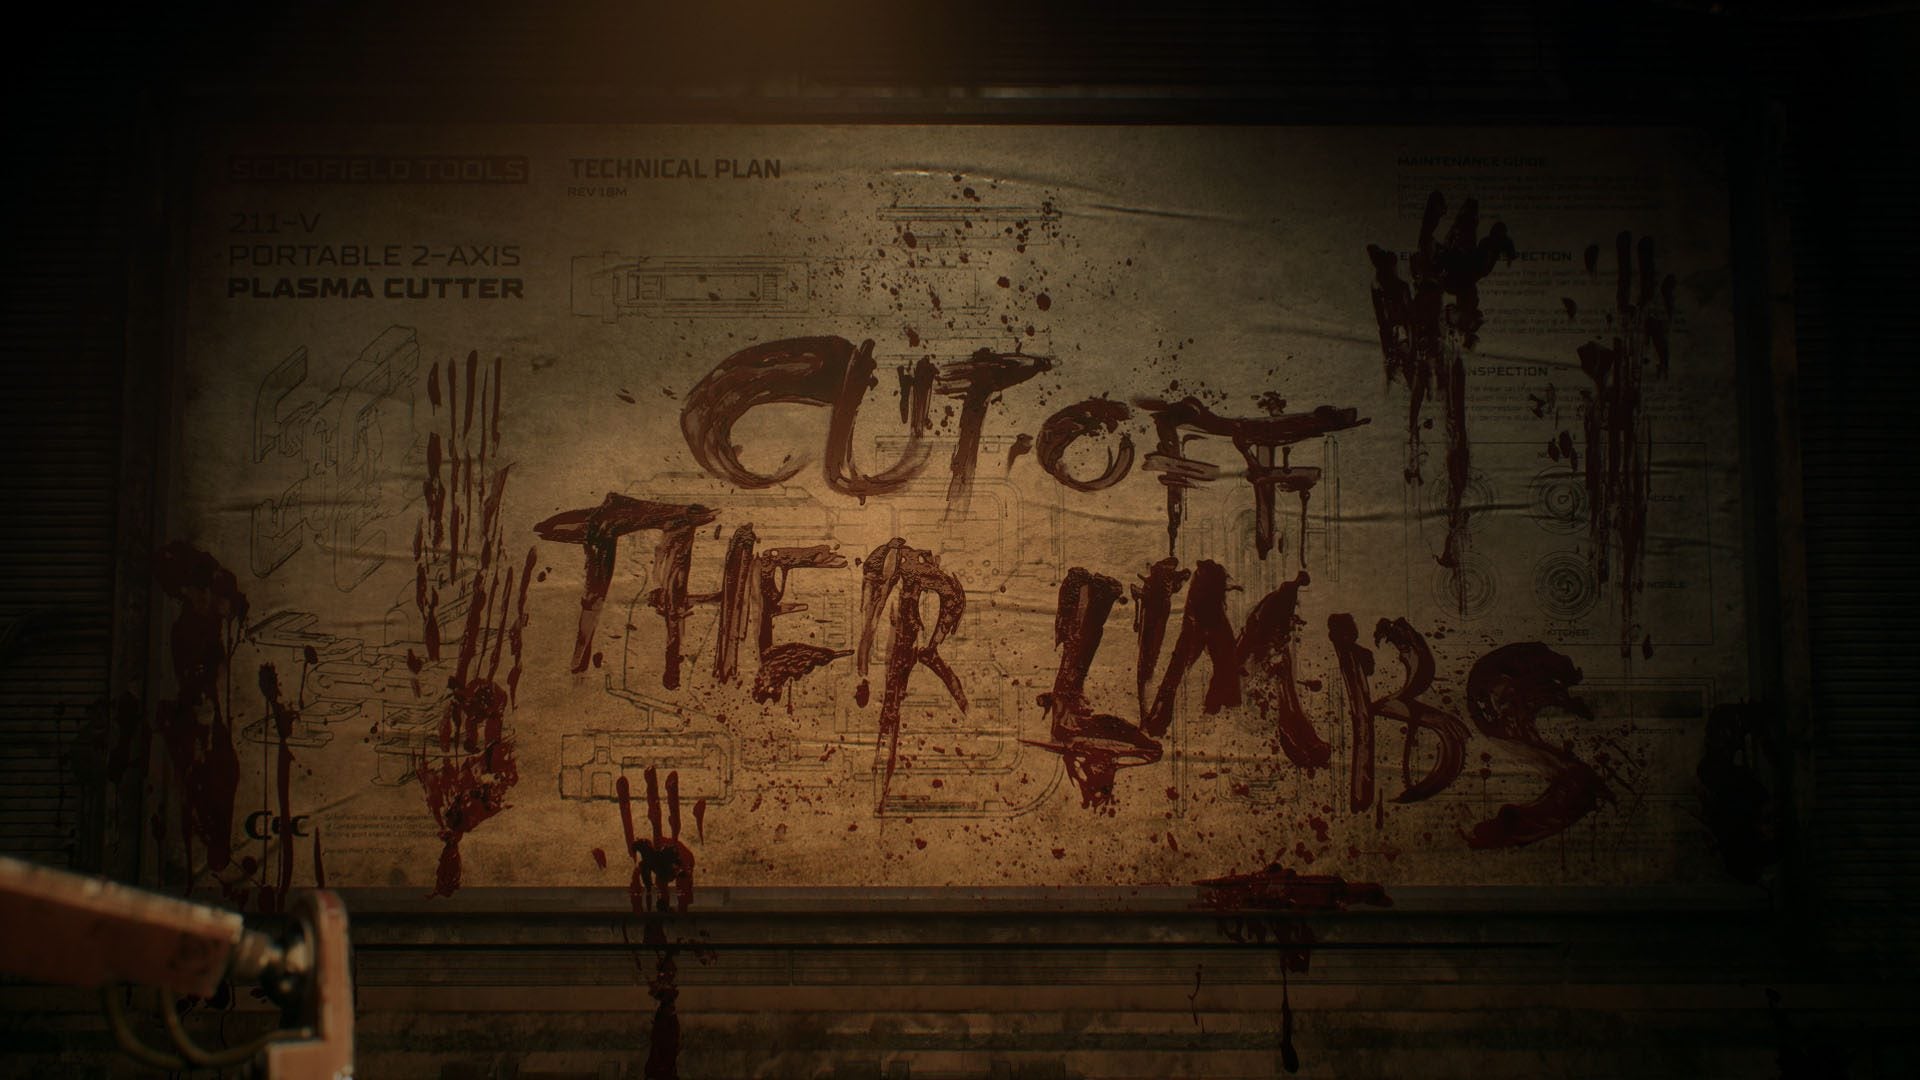 'Cut off their limbs' graffiti in the Dead Space remake